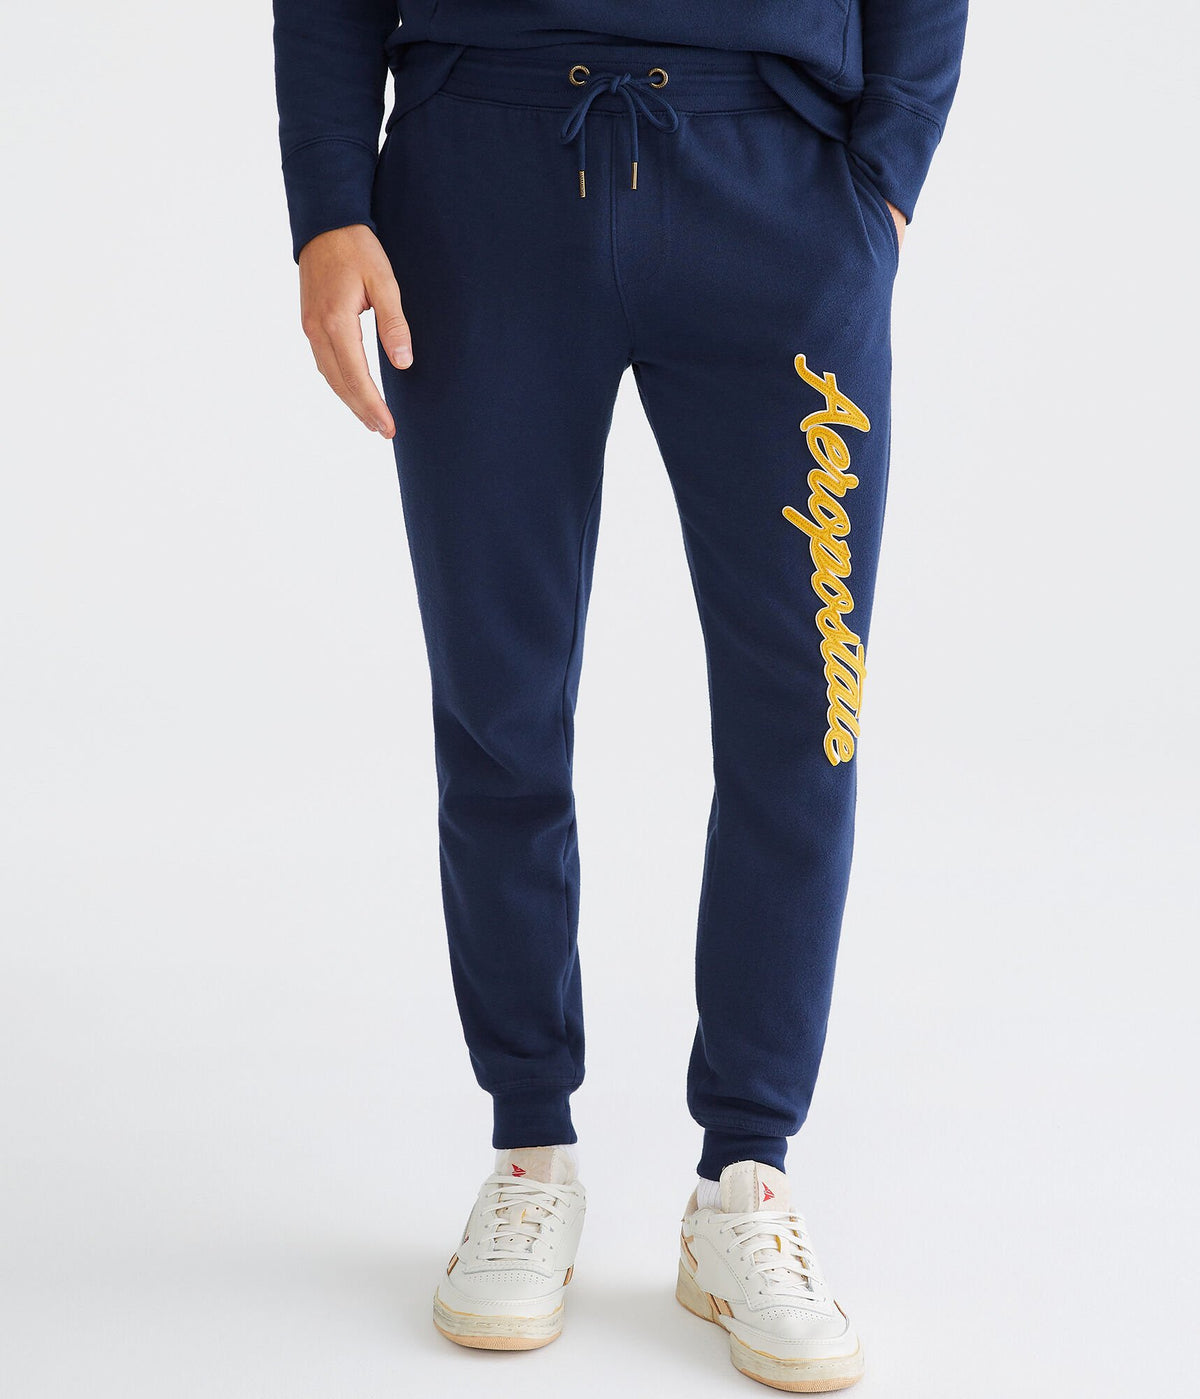 Aeropostale Mens' Aeropostale Script Heritage Jogger Sweatpants - Navy Blue - Size L - Cotton - Teen Fashion & Clothing Cadet Navy